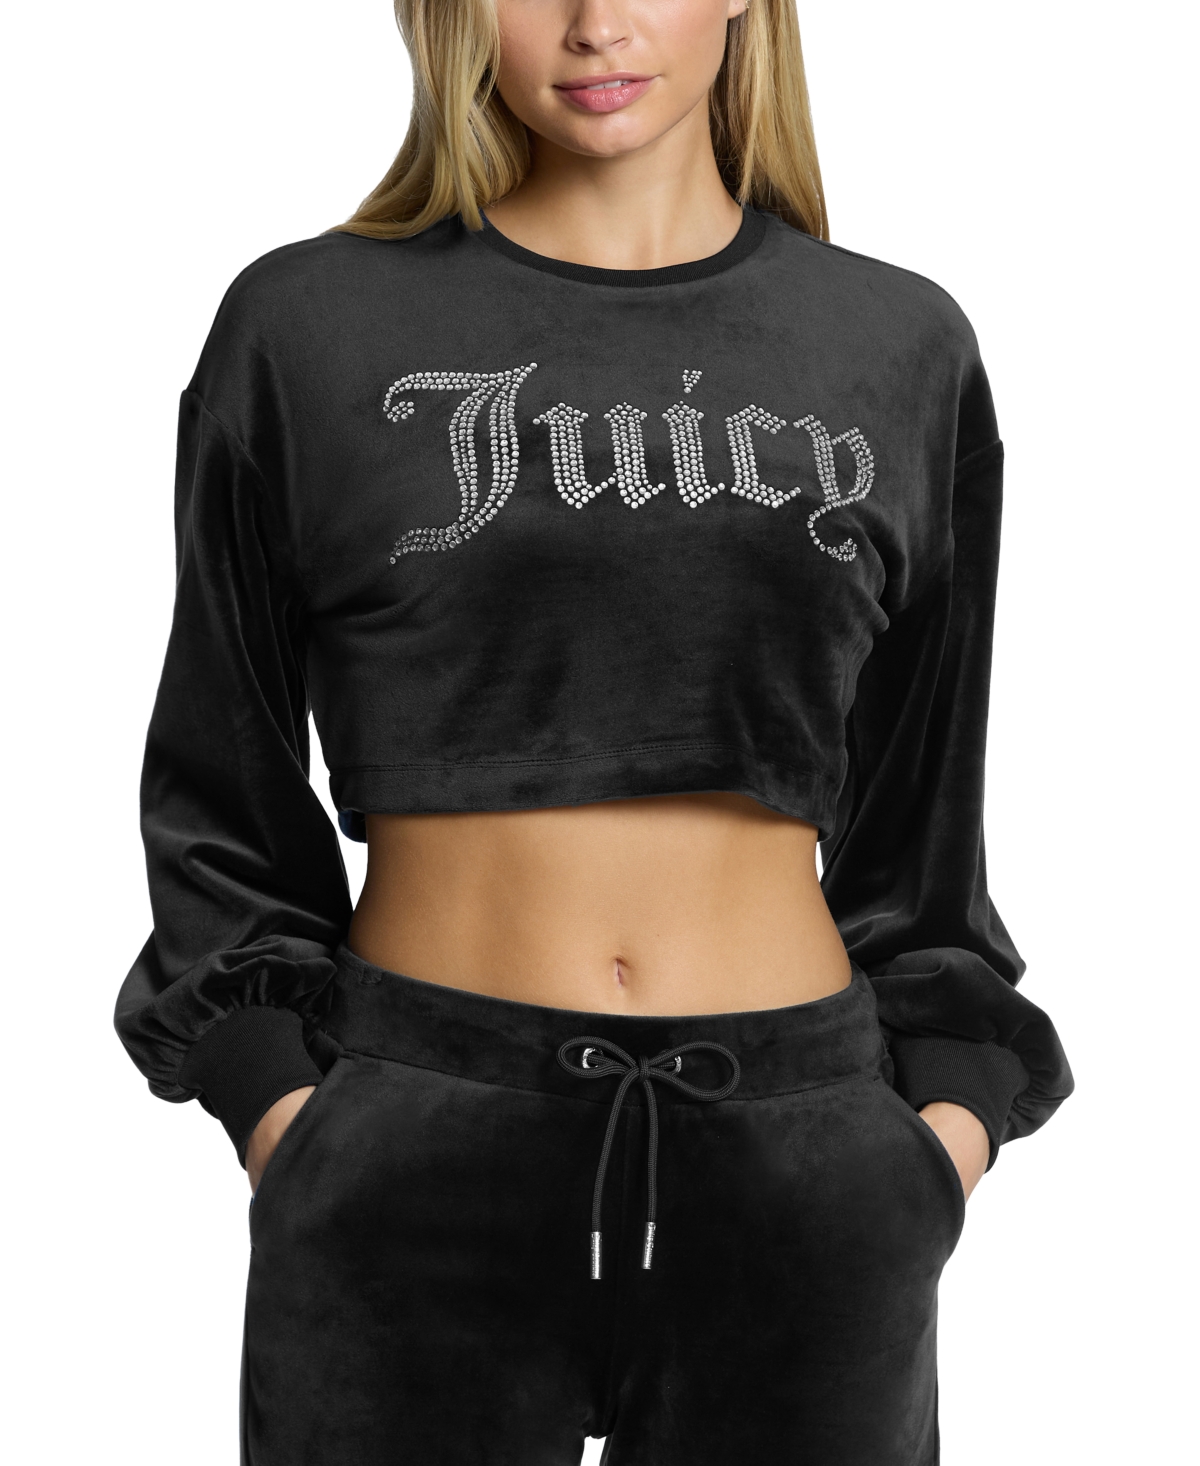  Juicy Couture Women's Cropped Logo Sweatshirt